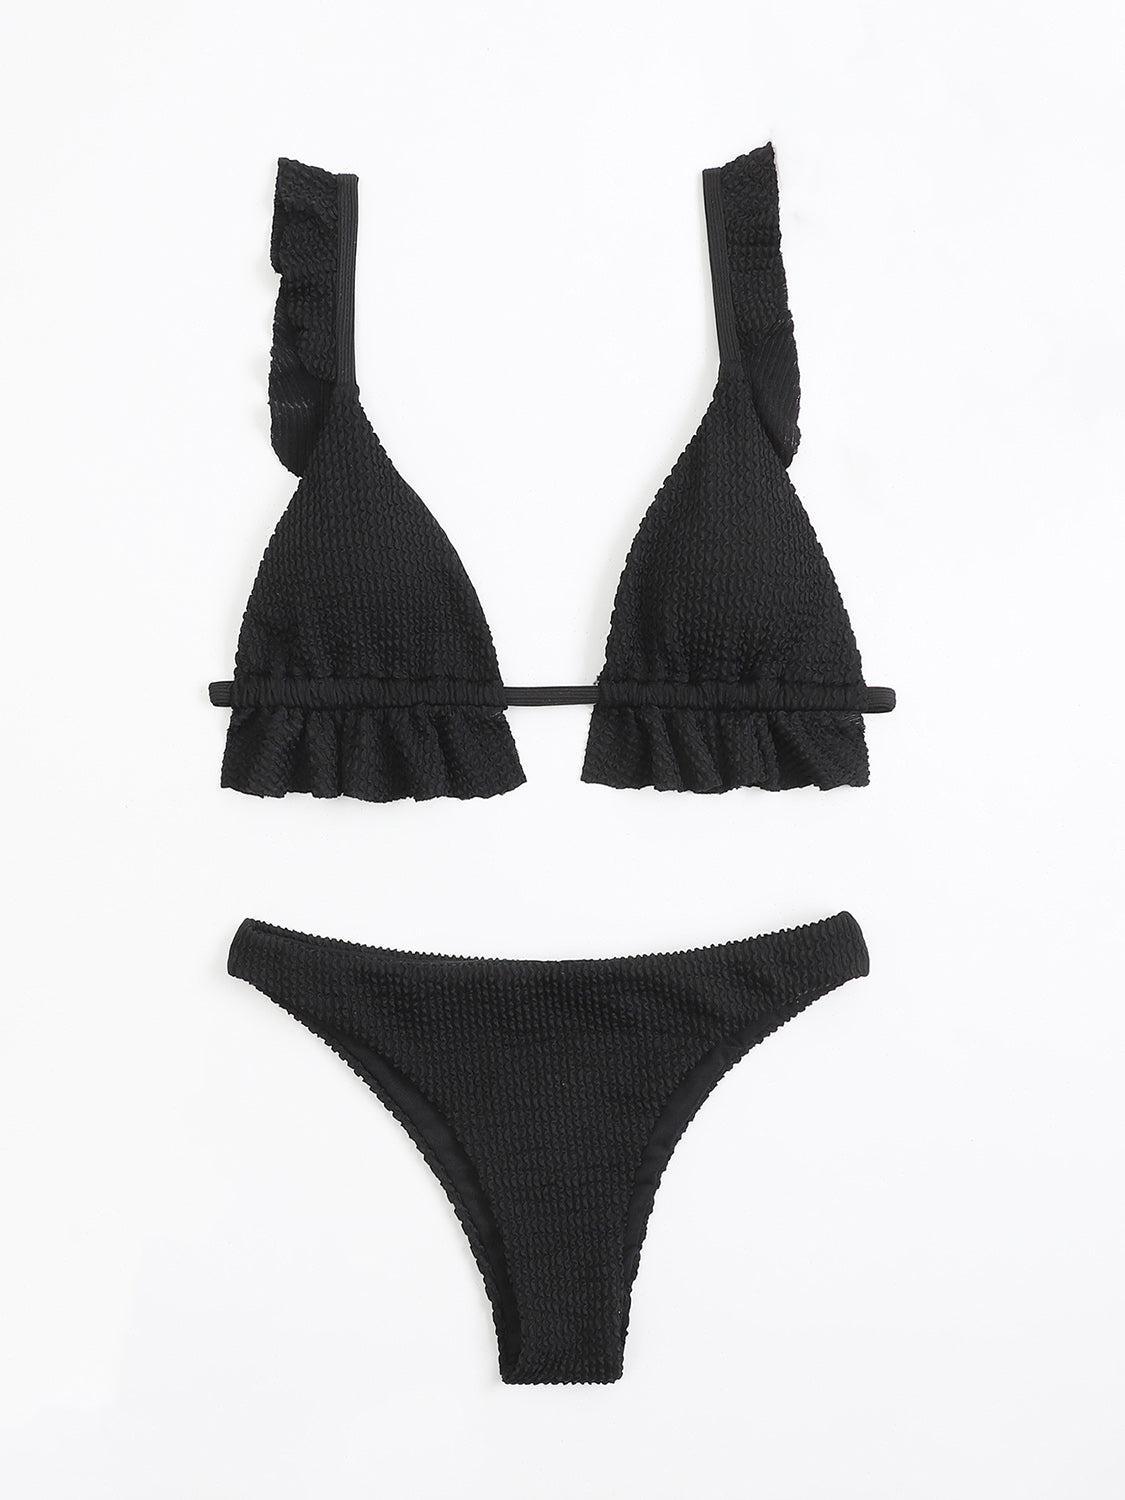 a black bikini top and bottom with ruffles